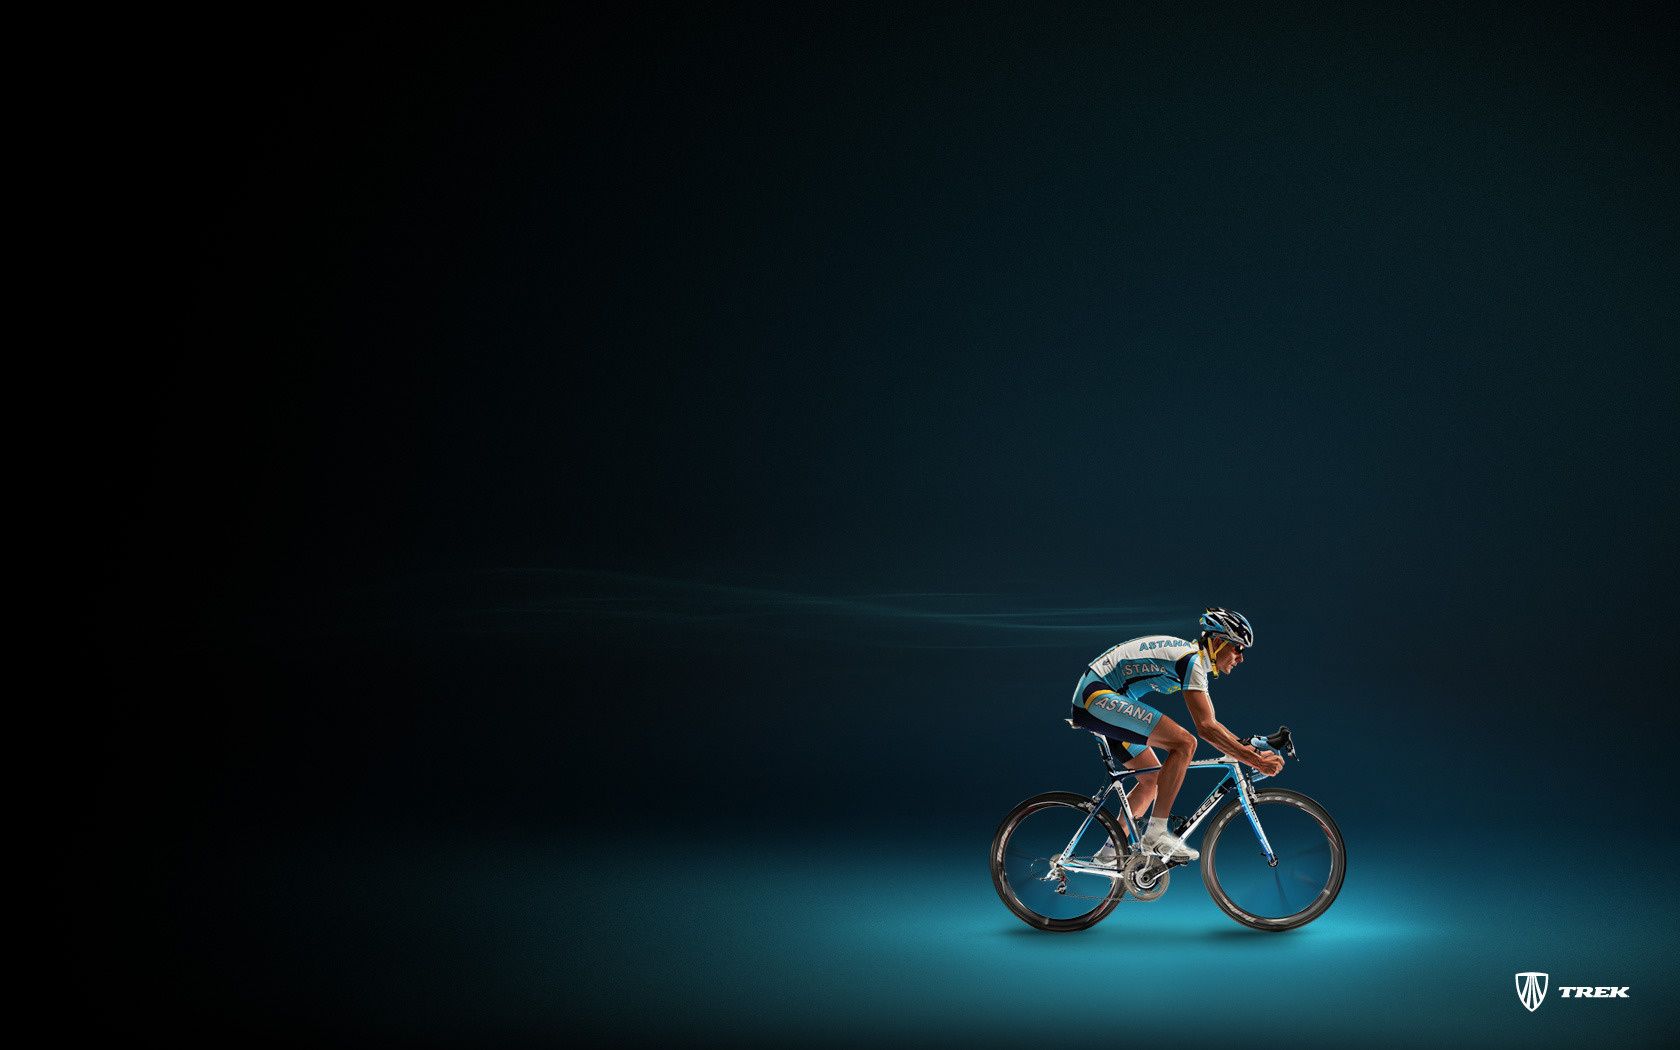 Cool Riding Bike At Night Wallpapers